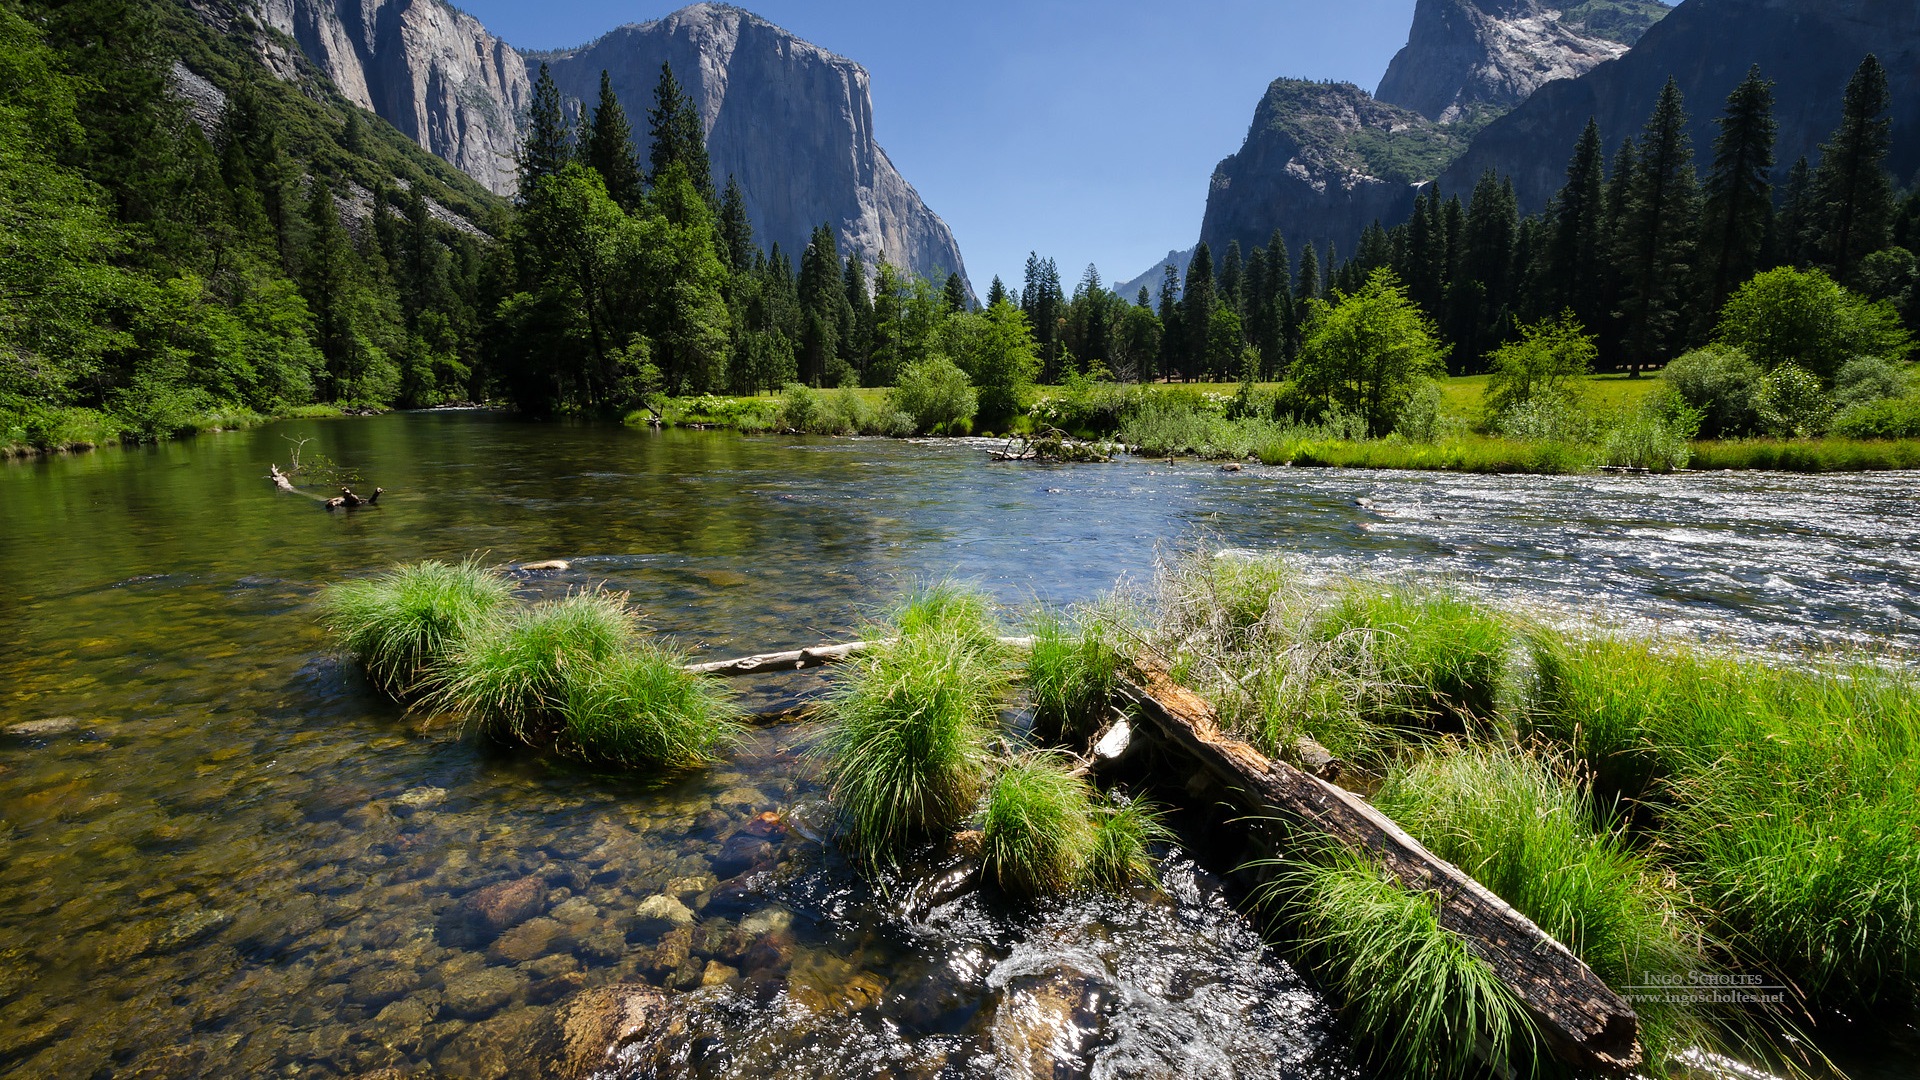 Windows 8 Thema, Yosemite National Park HD Wallpaper #2 - 1920x1080